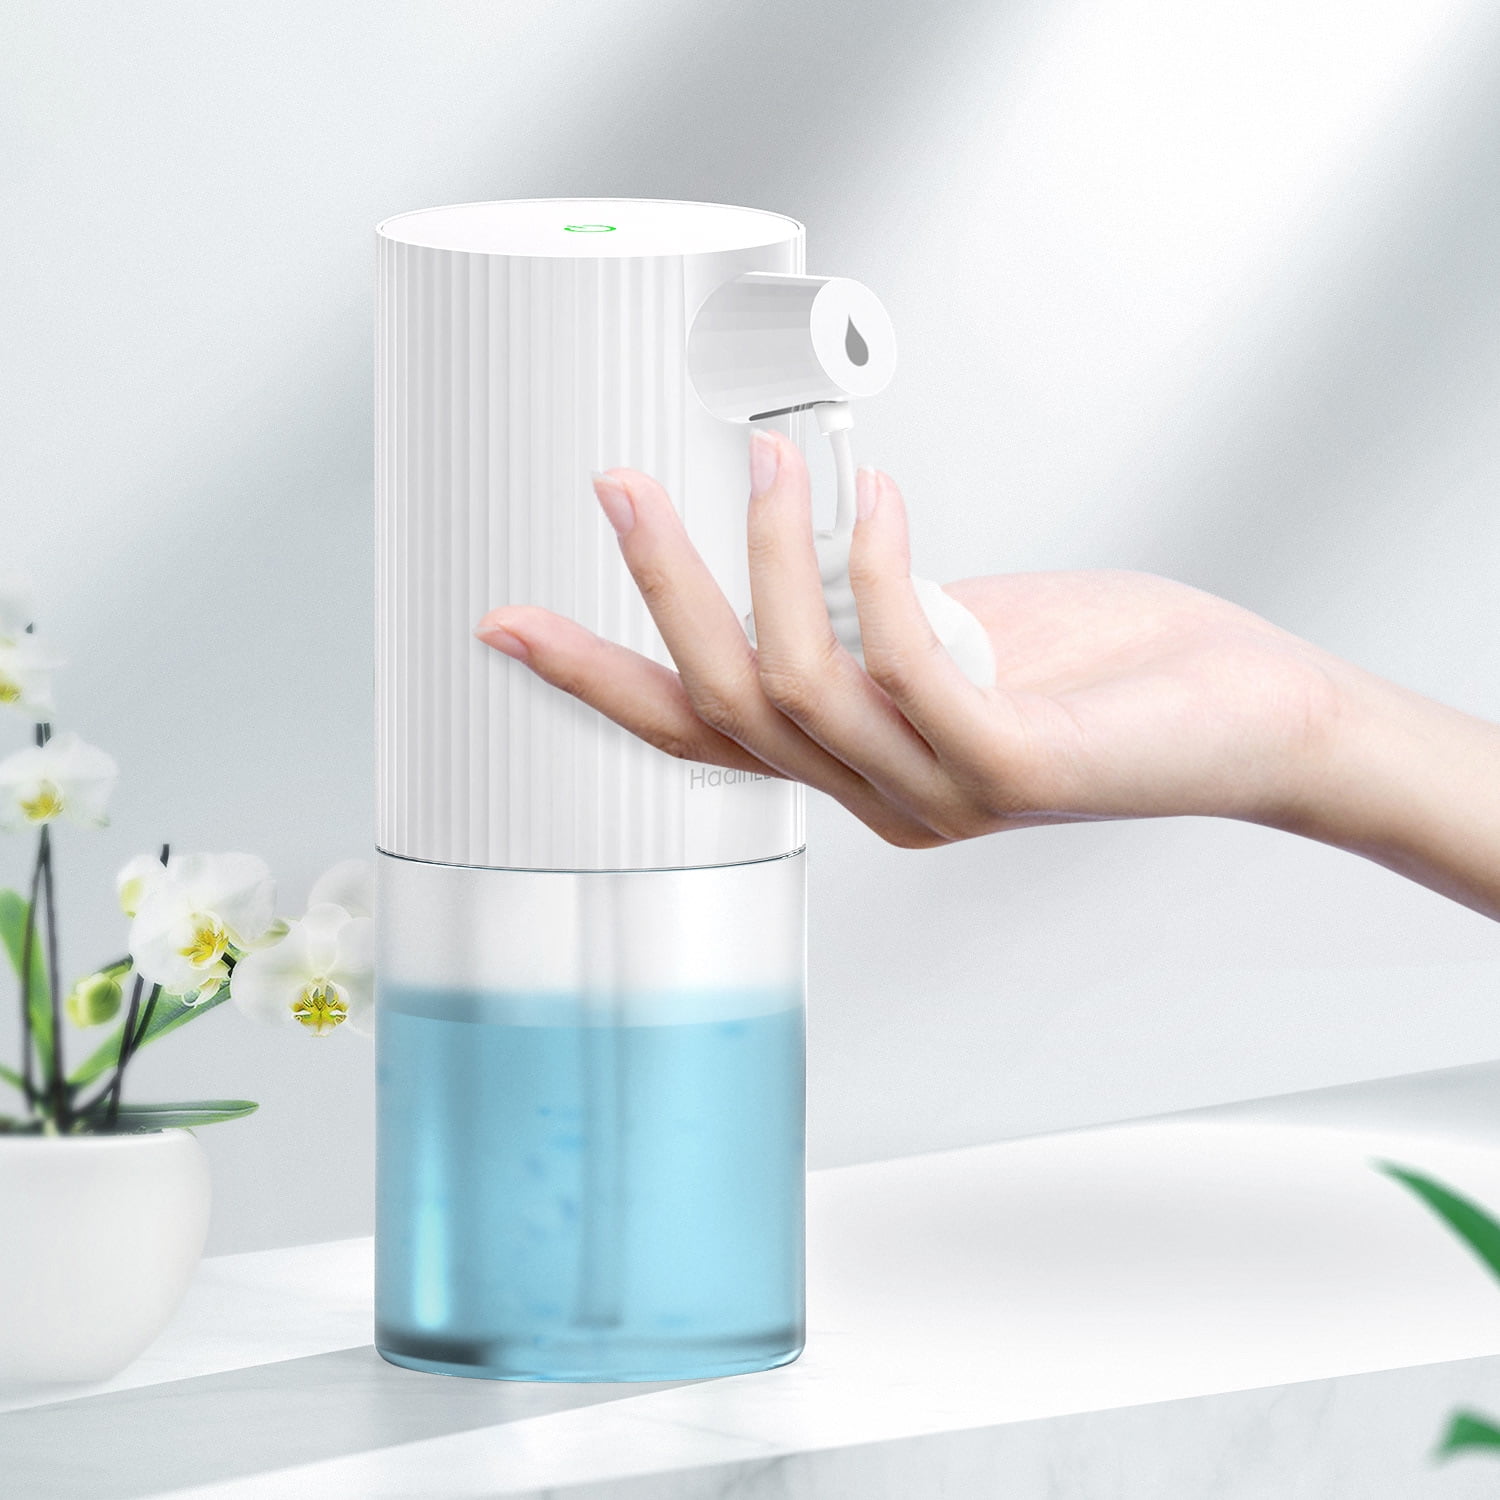 Details about   Hygienic Touchless Automatic Foam Soap Dispenser 